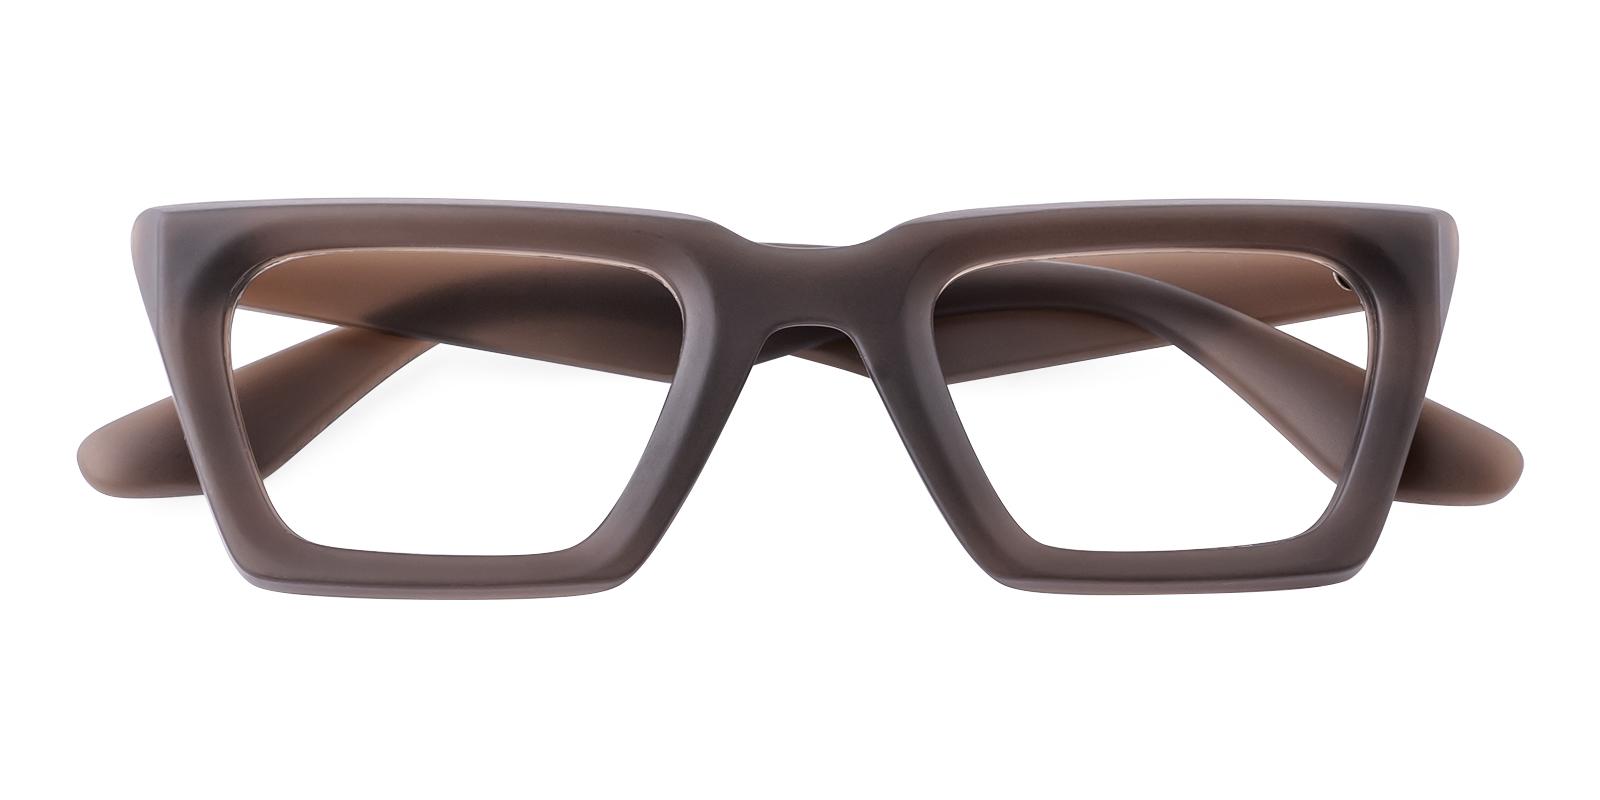 Tachyair Brown Acetate Eyeglasses , UniversalBridgeFit Frames from ABBE Glasses